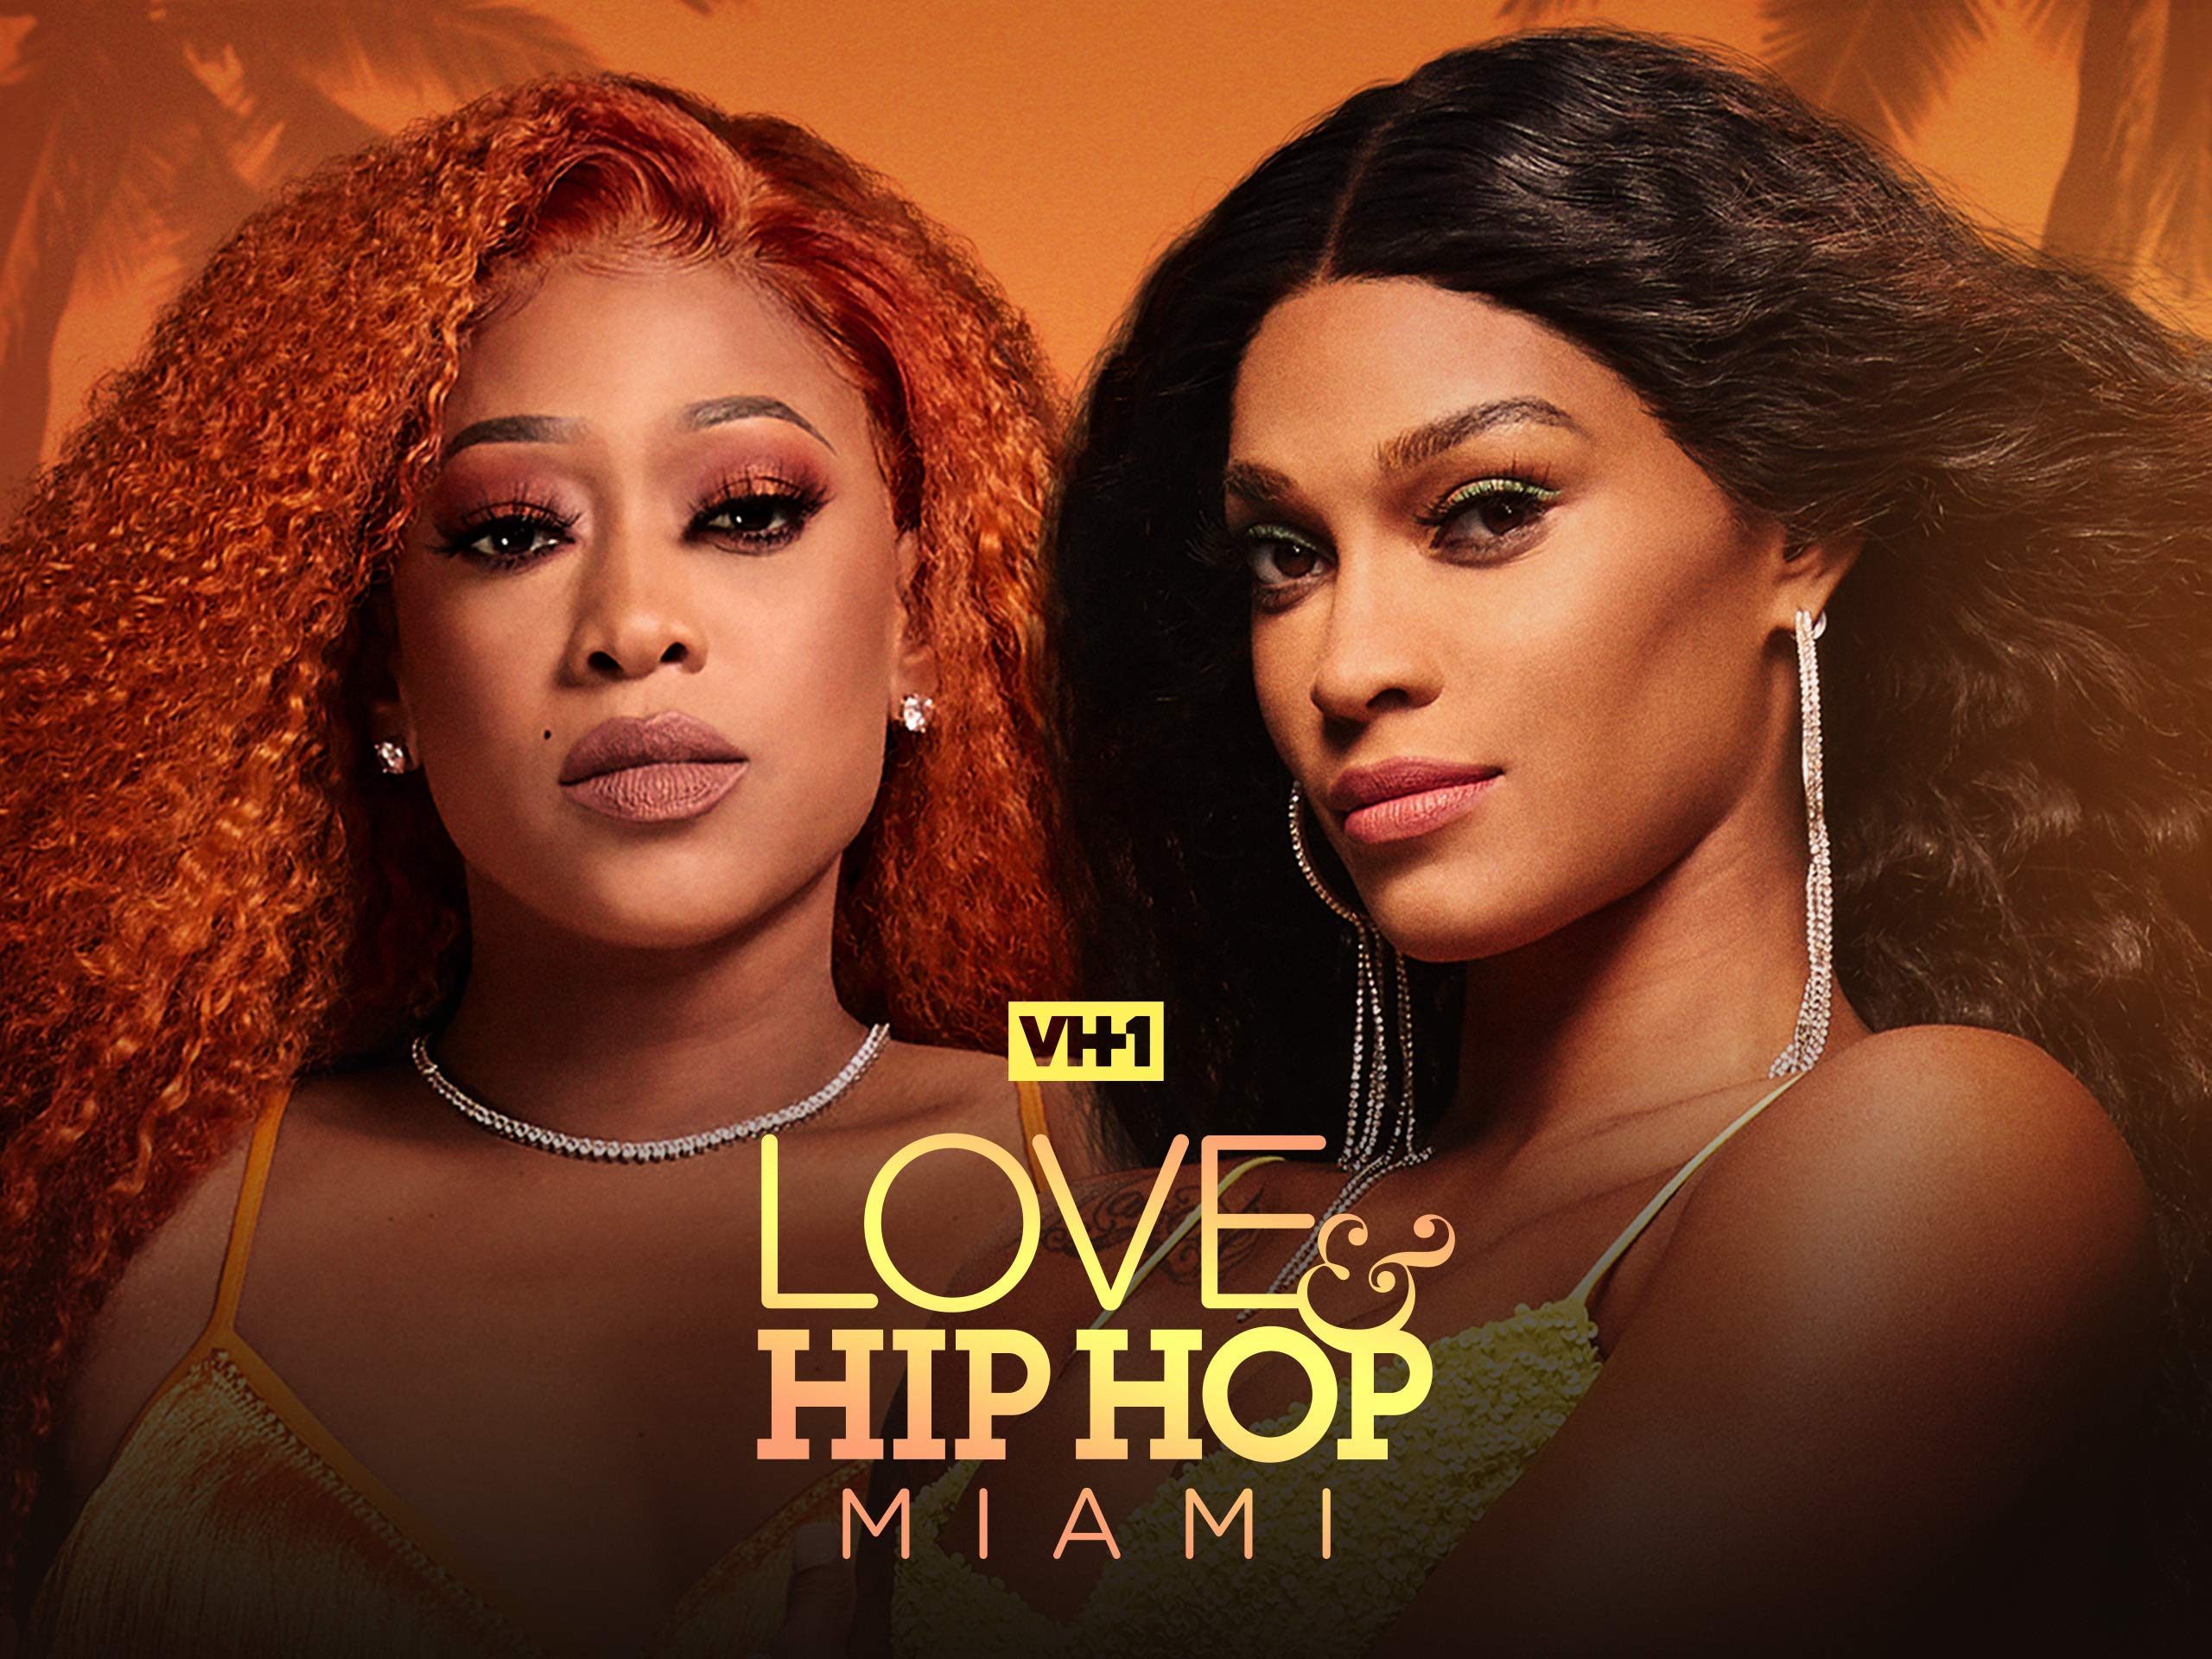 Love & Hip Hop Miami Season 3 Release Date on VH1; When Does It Start